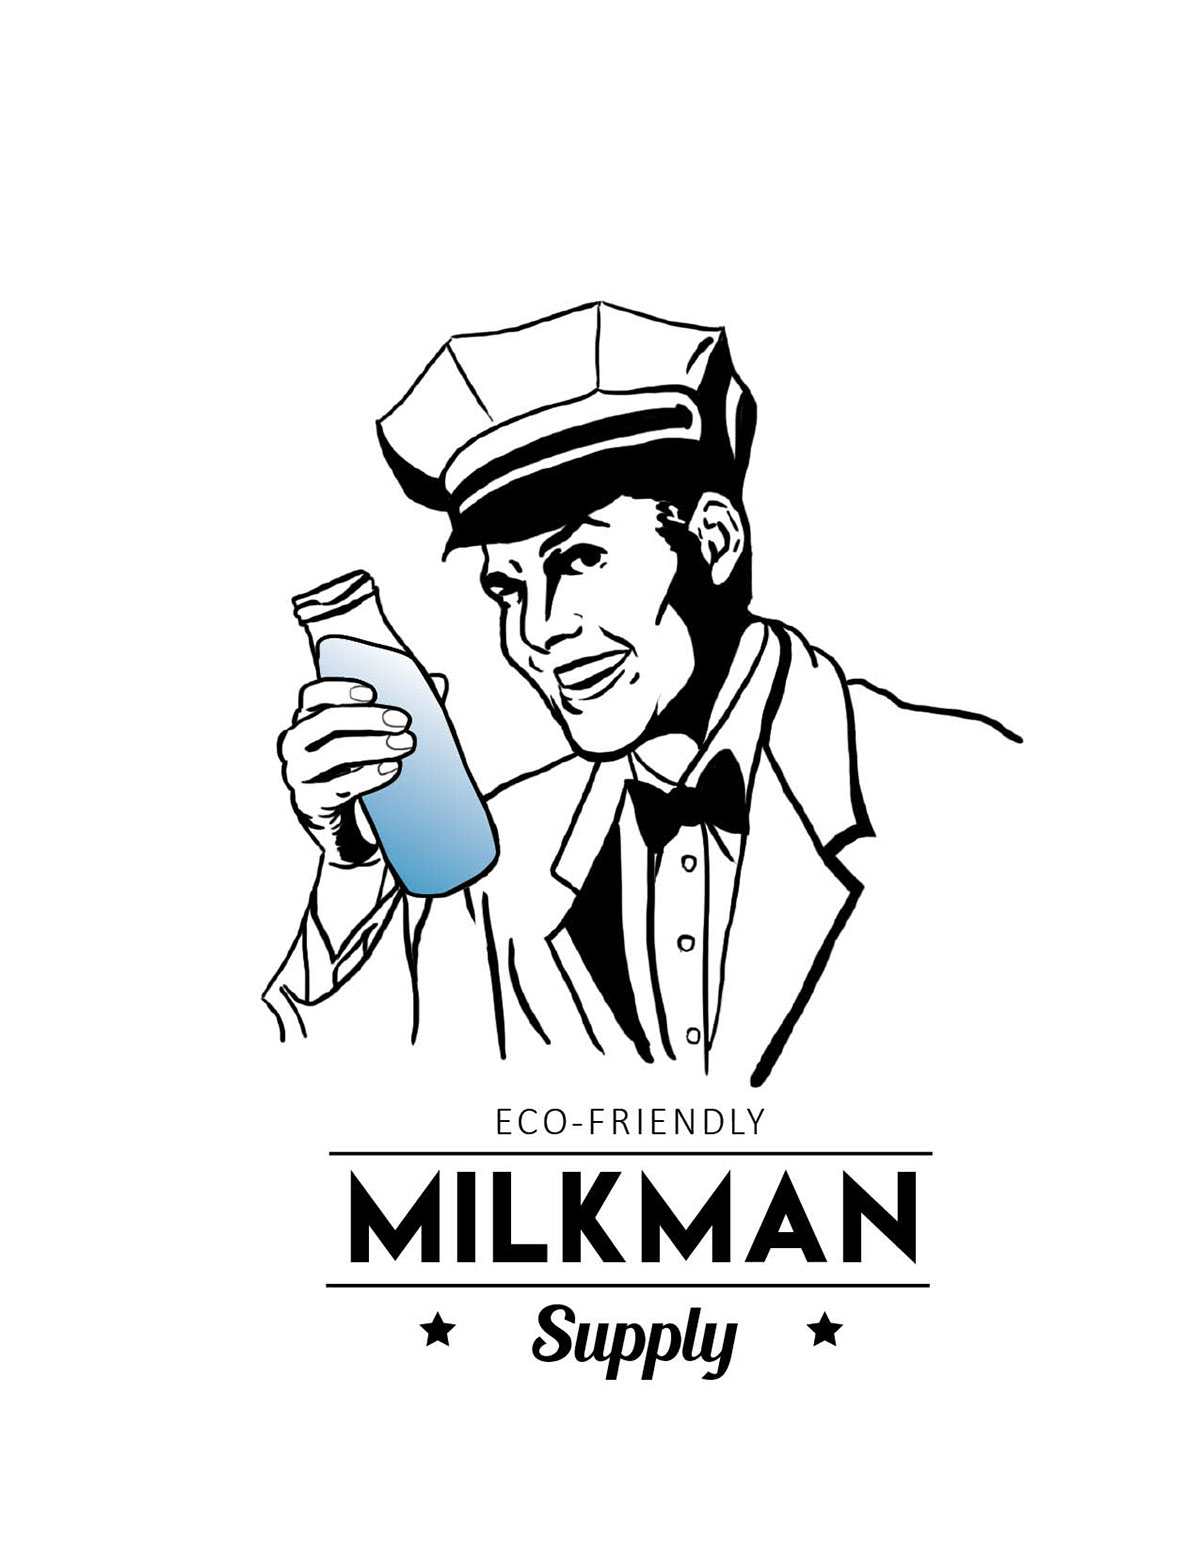 Milkman Supply.